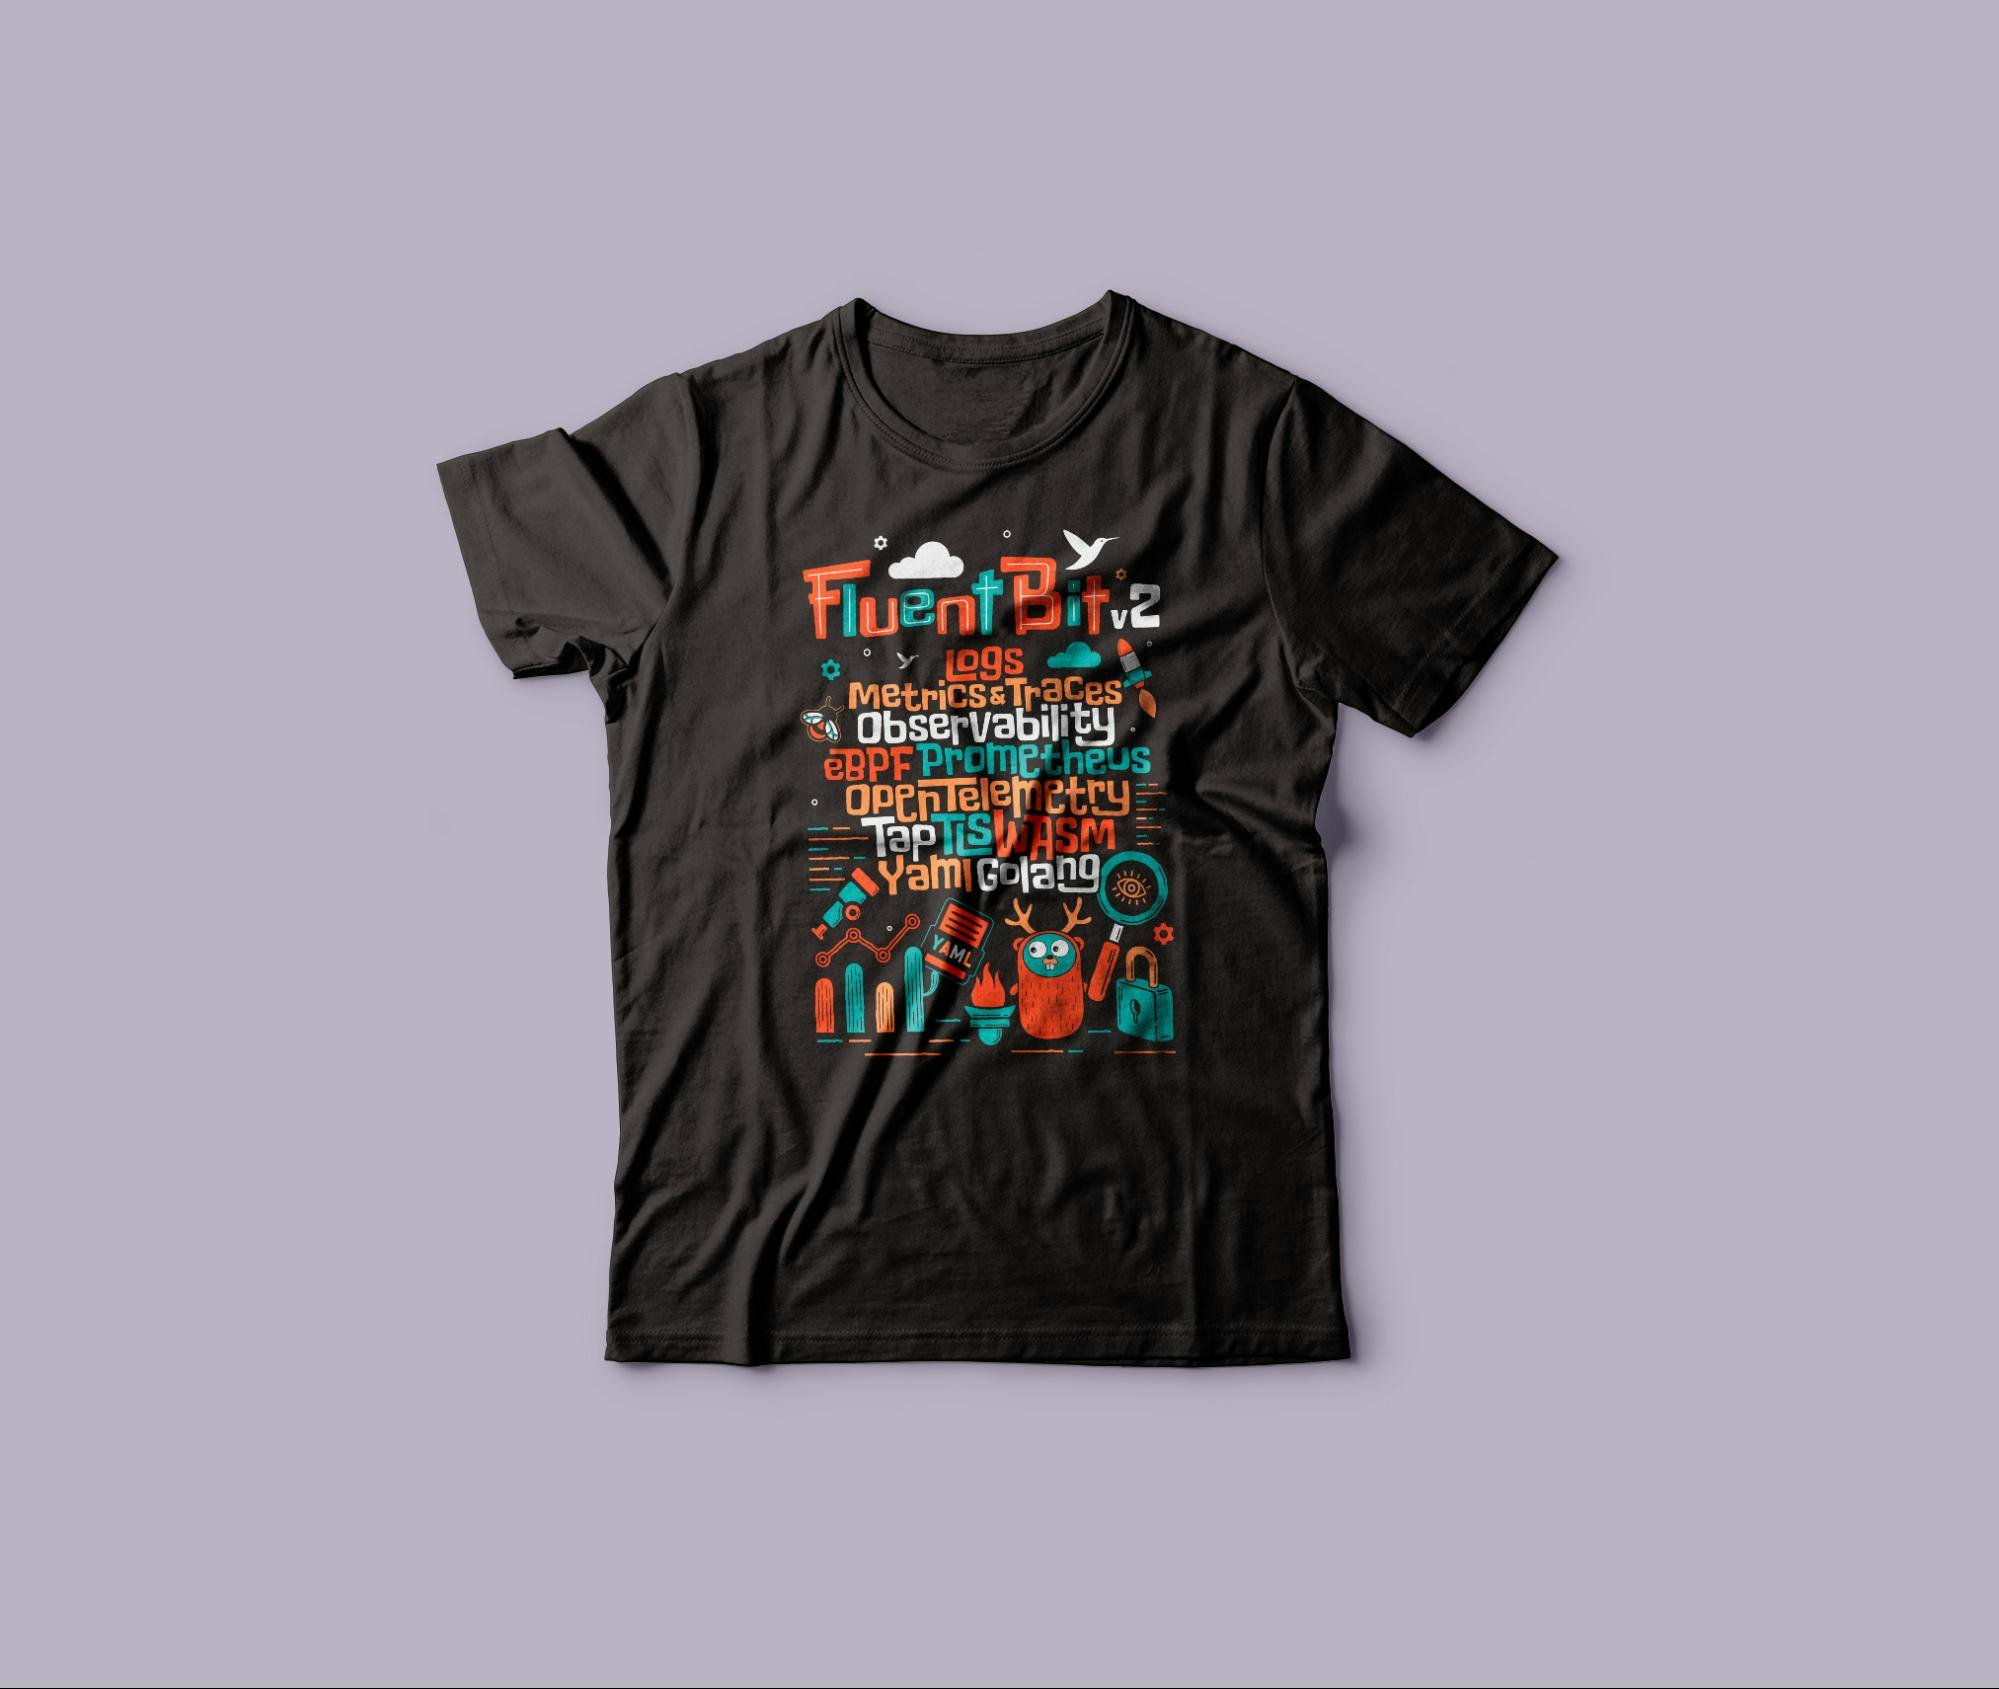 fluent-bit-v2-shirt.jpeg